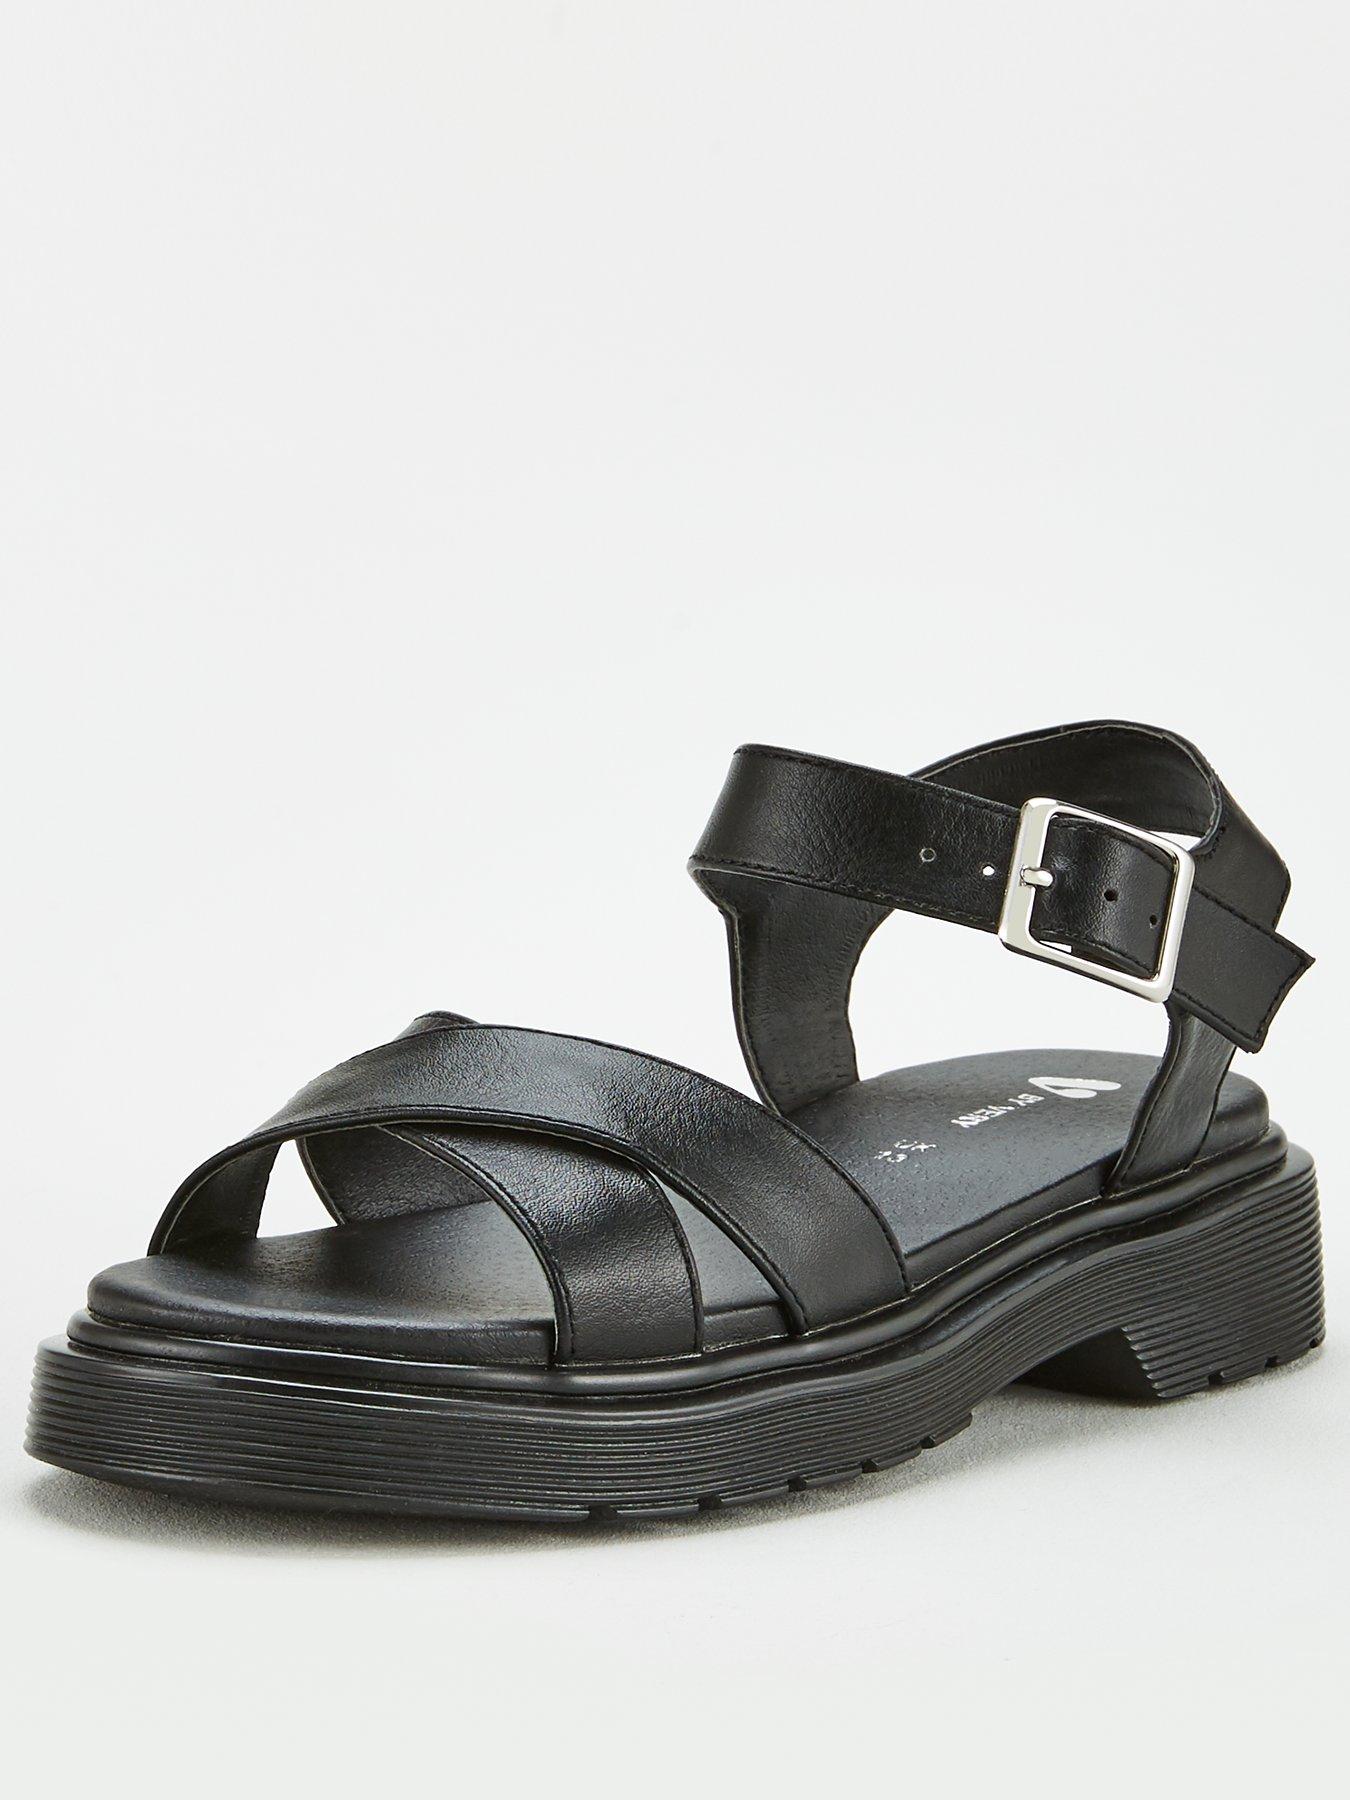 chunky womens sandals uk